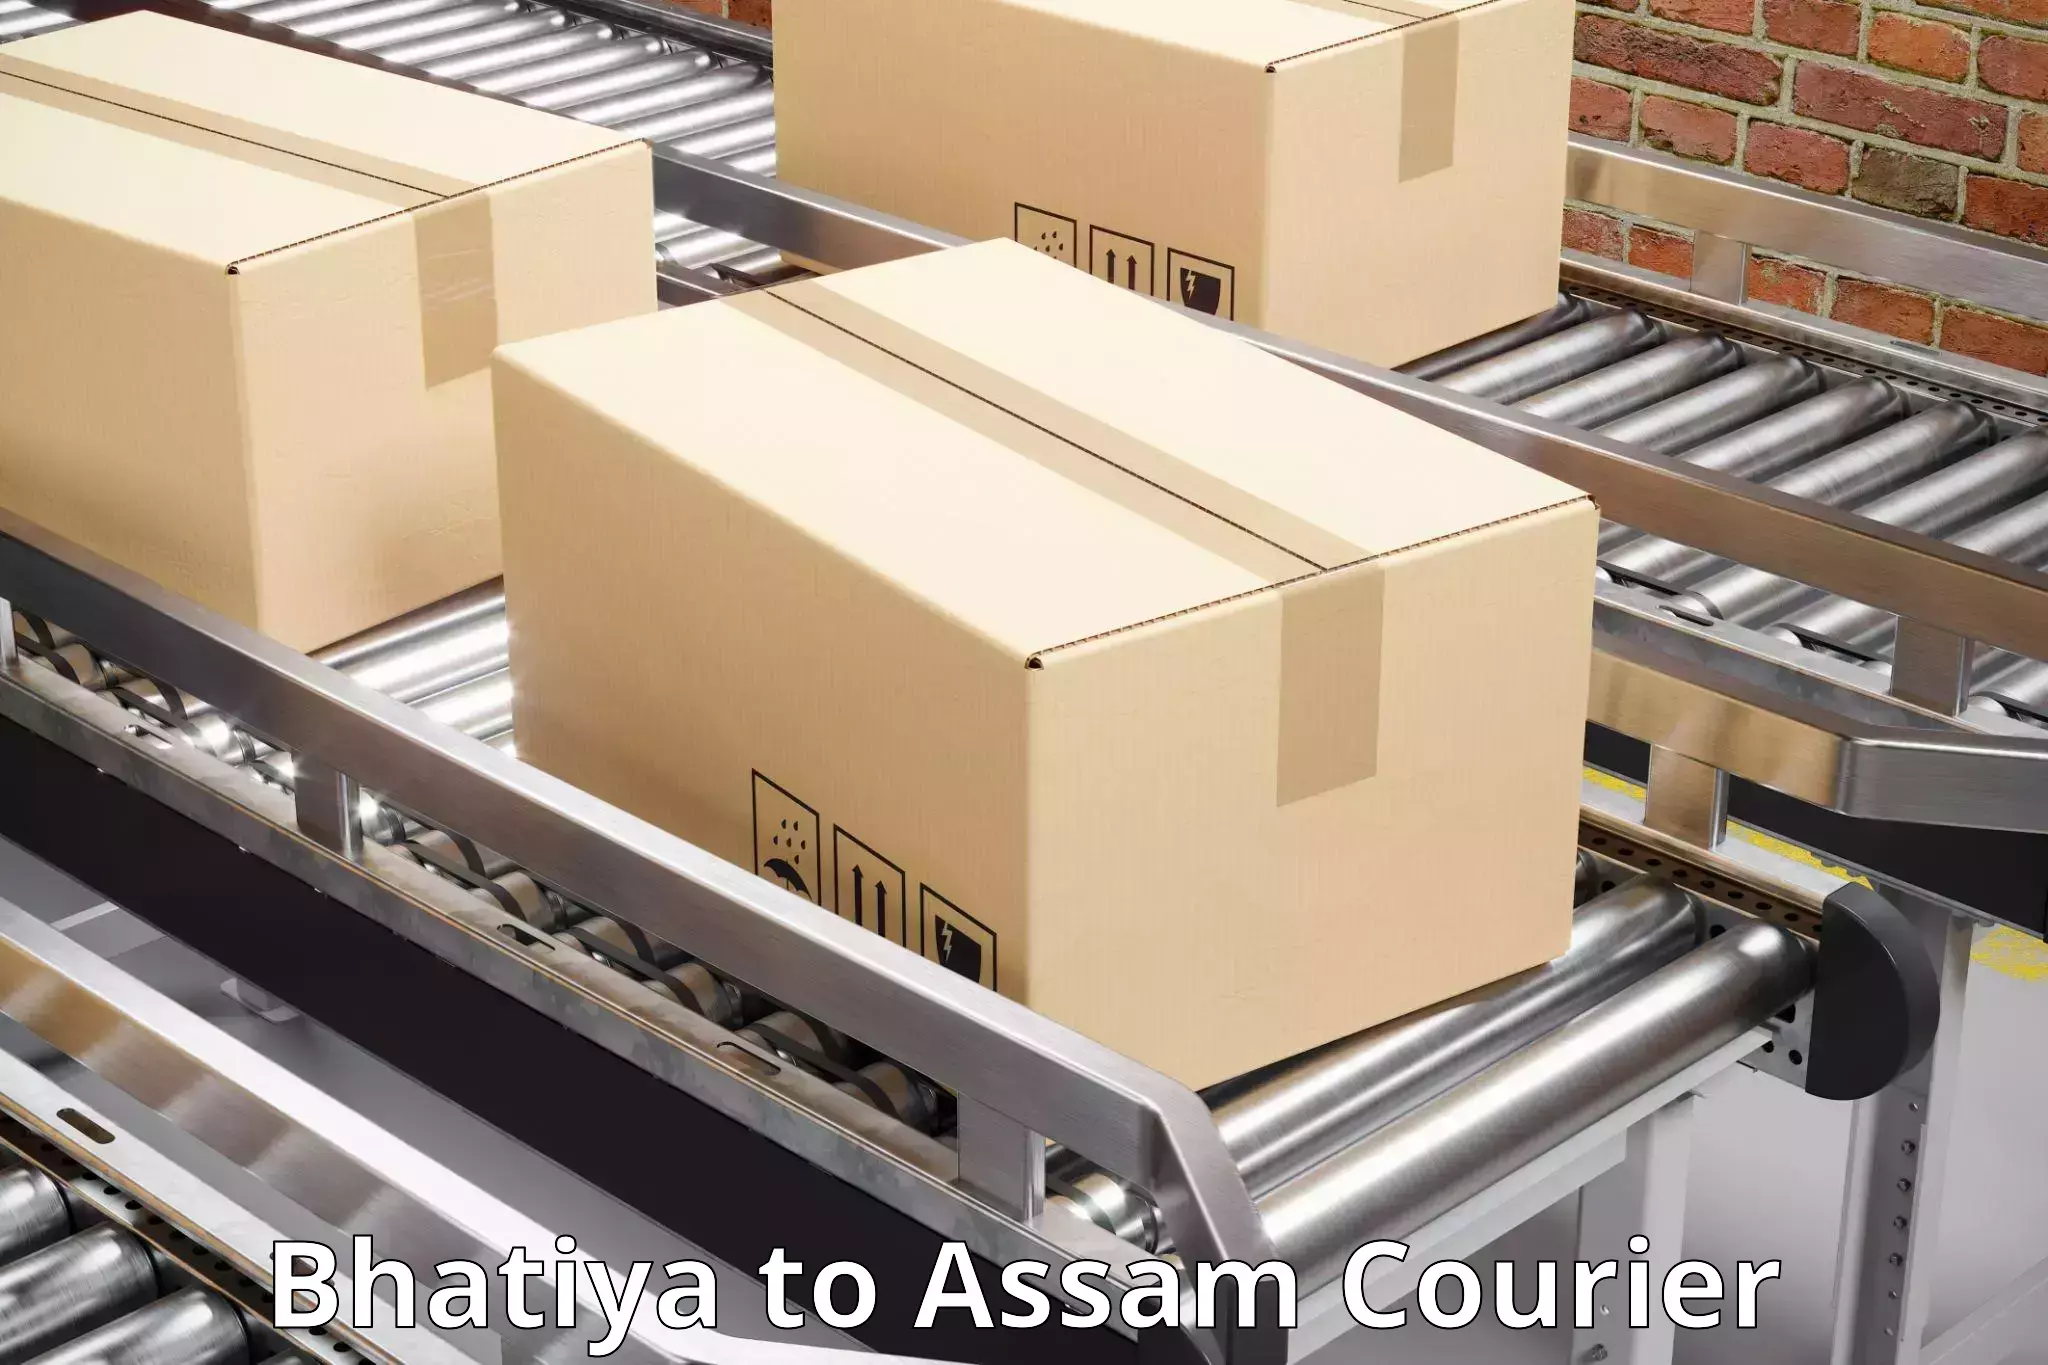 Courier service partnerships Bhatiya to Assam